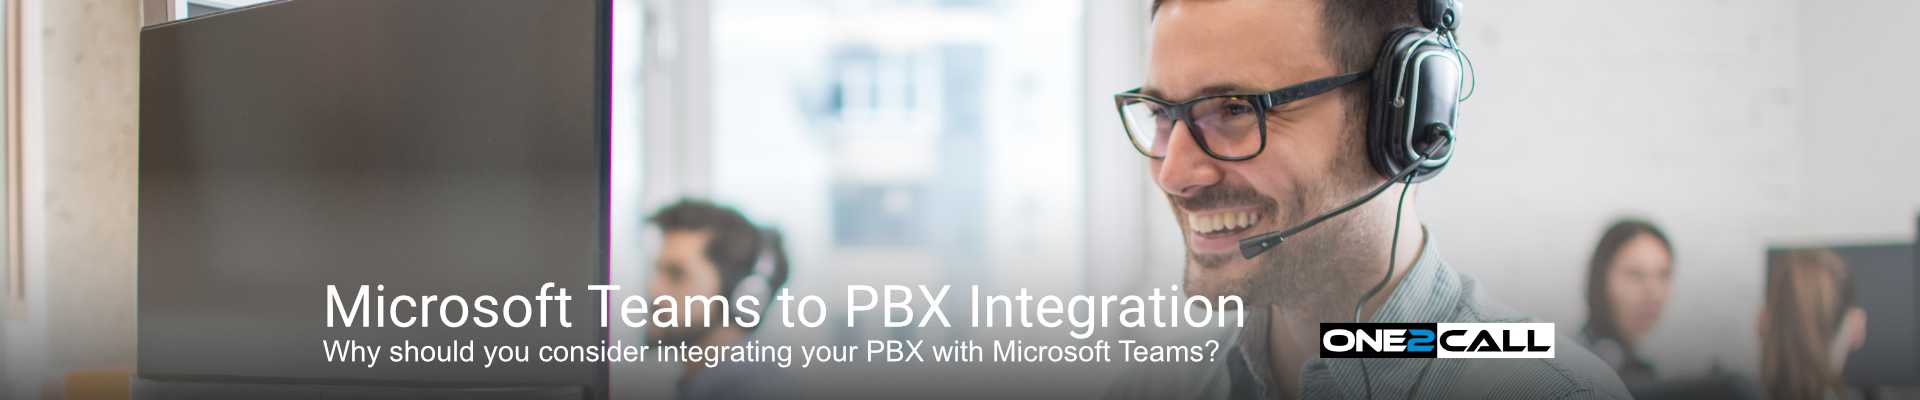 Microsoft Teams to PBX Integration